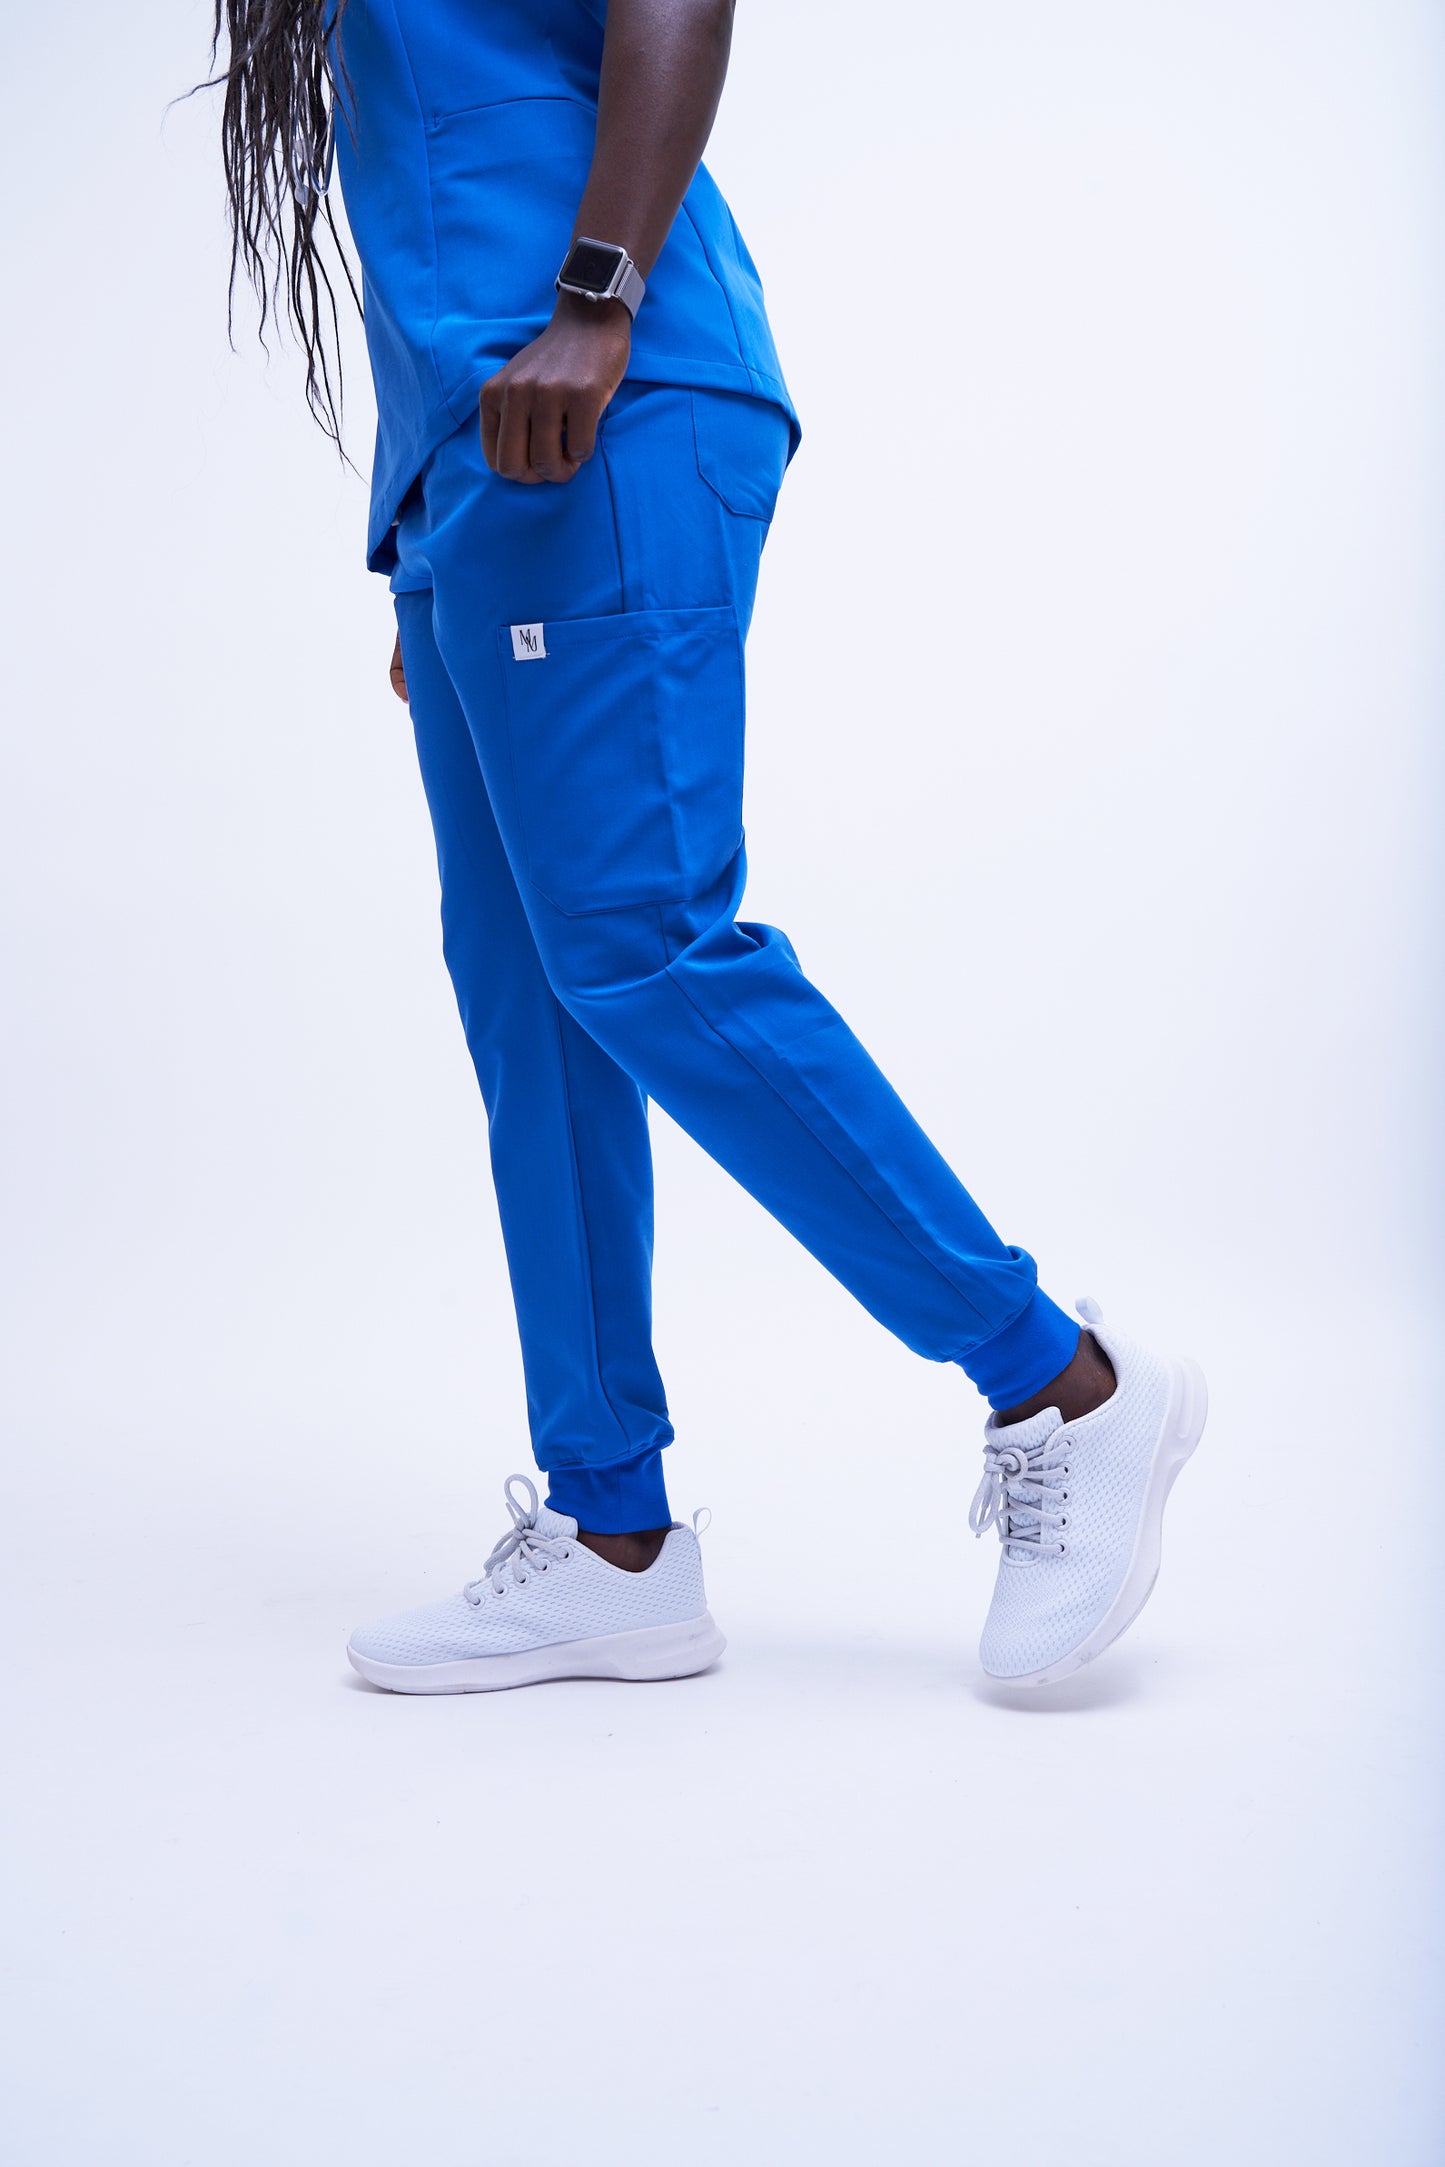 mary-c-six-pocket-royal-blue-jogger-scrub-pants-467